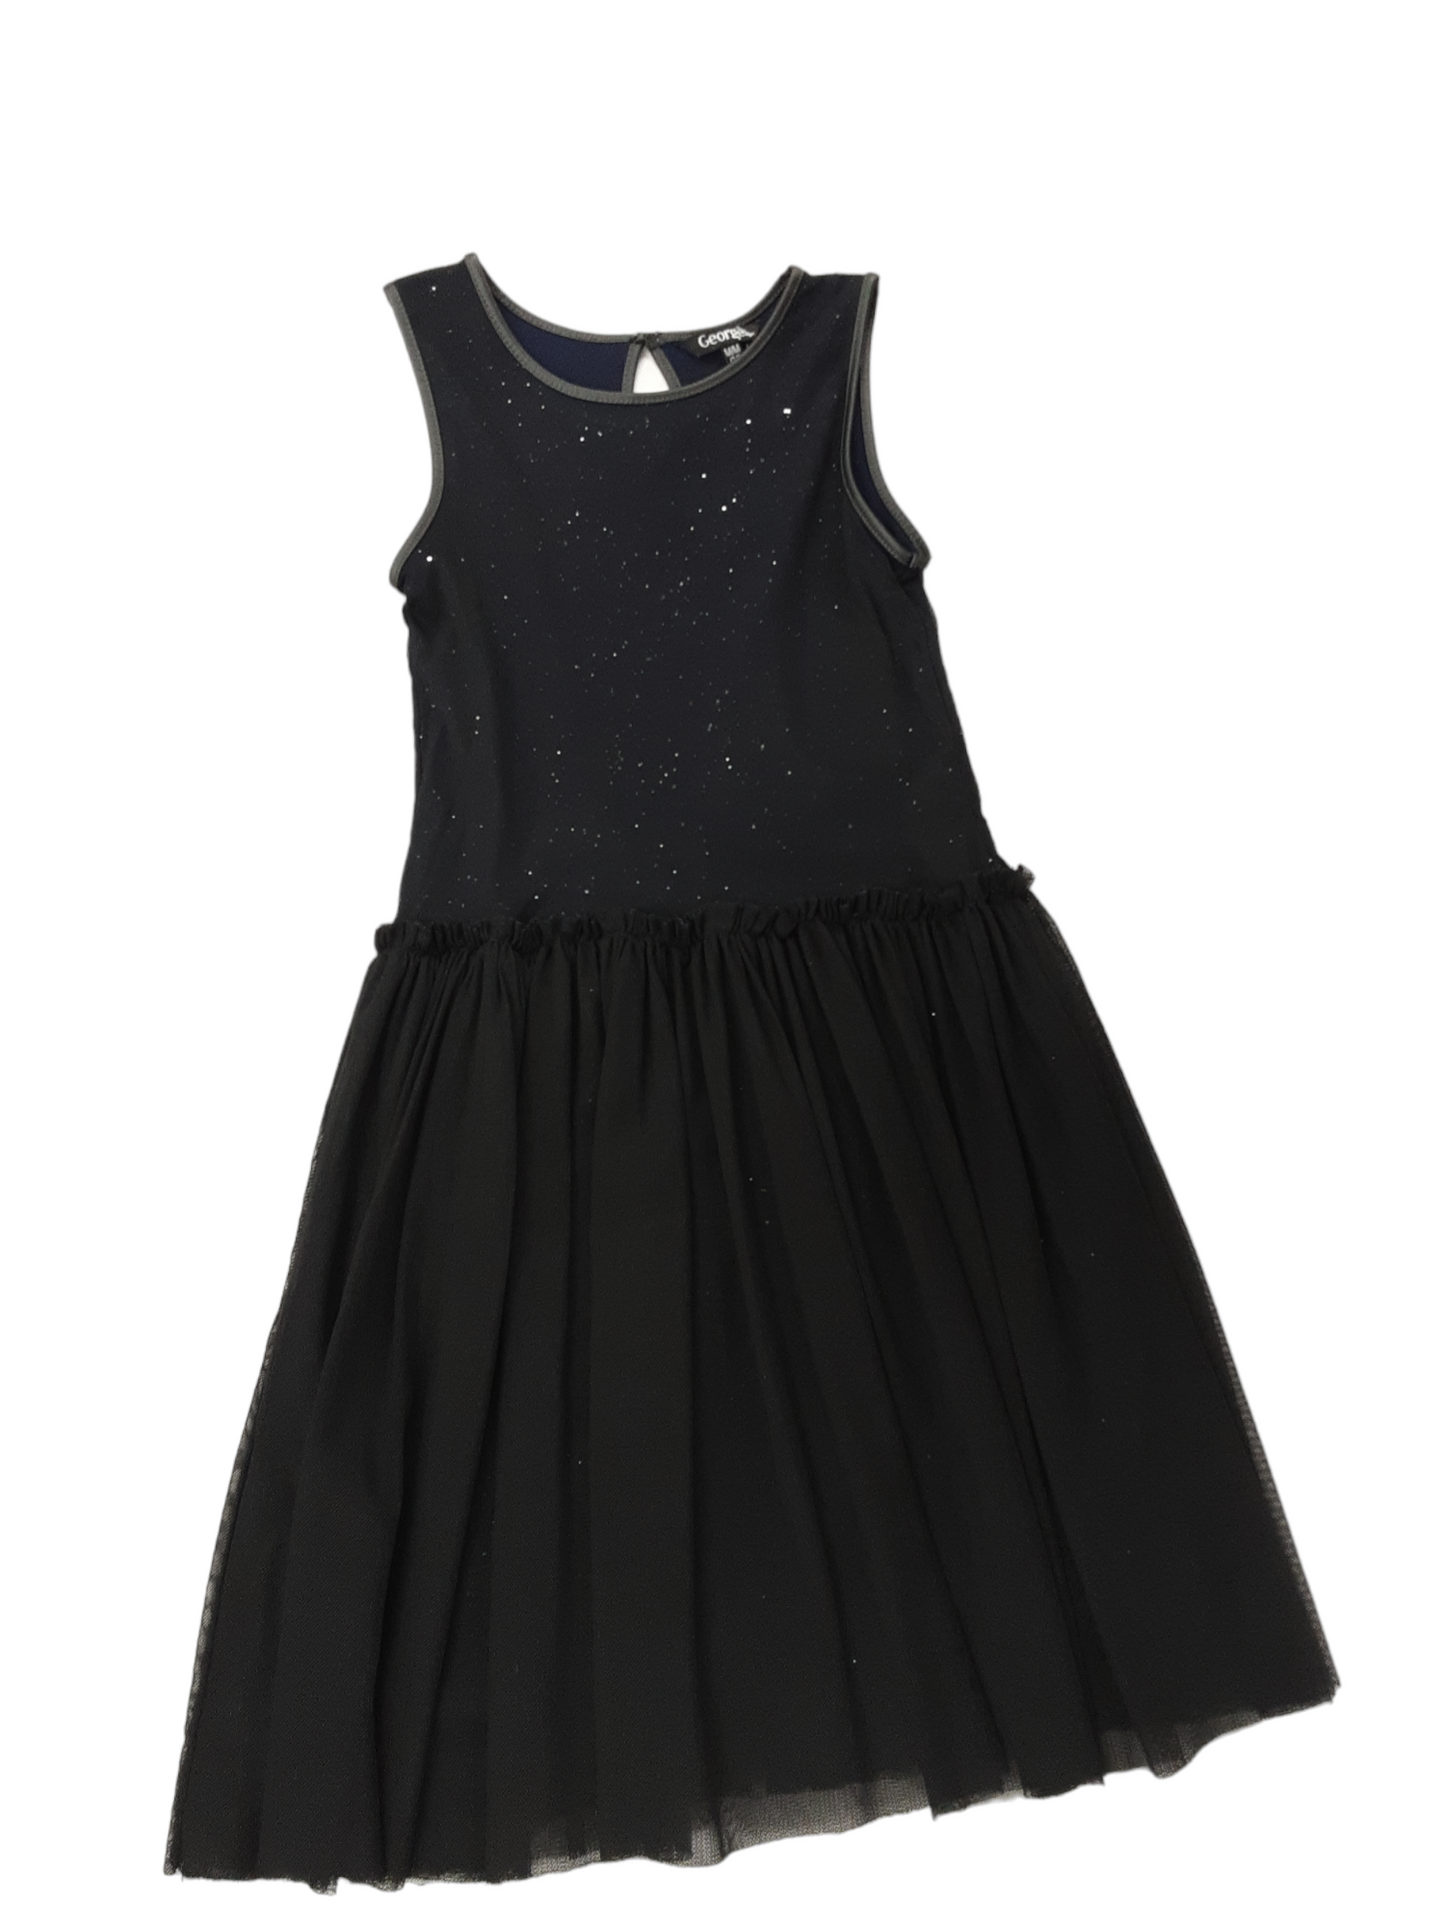 Sparkly soft line dress size 7/8